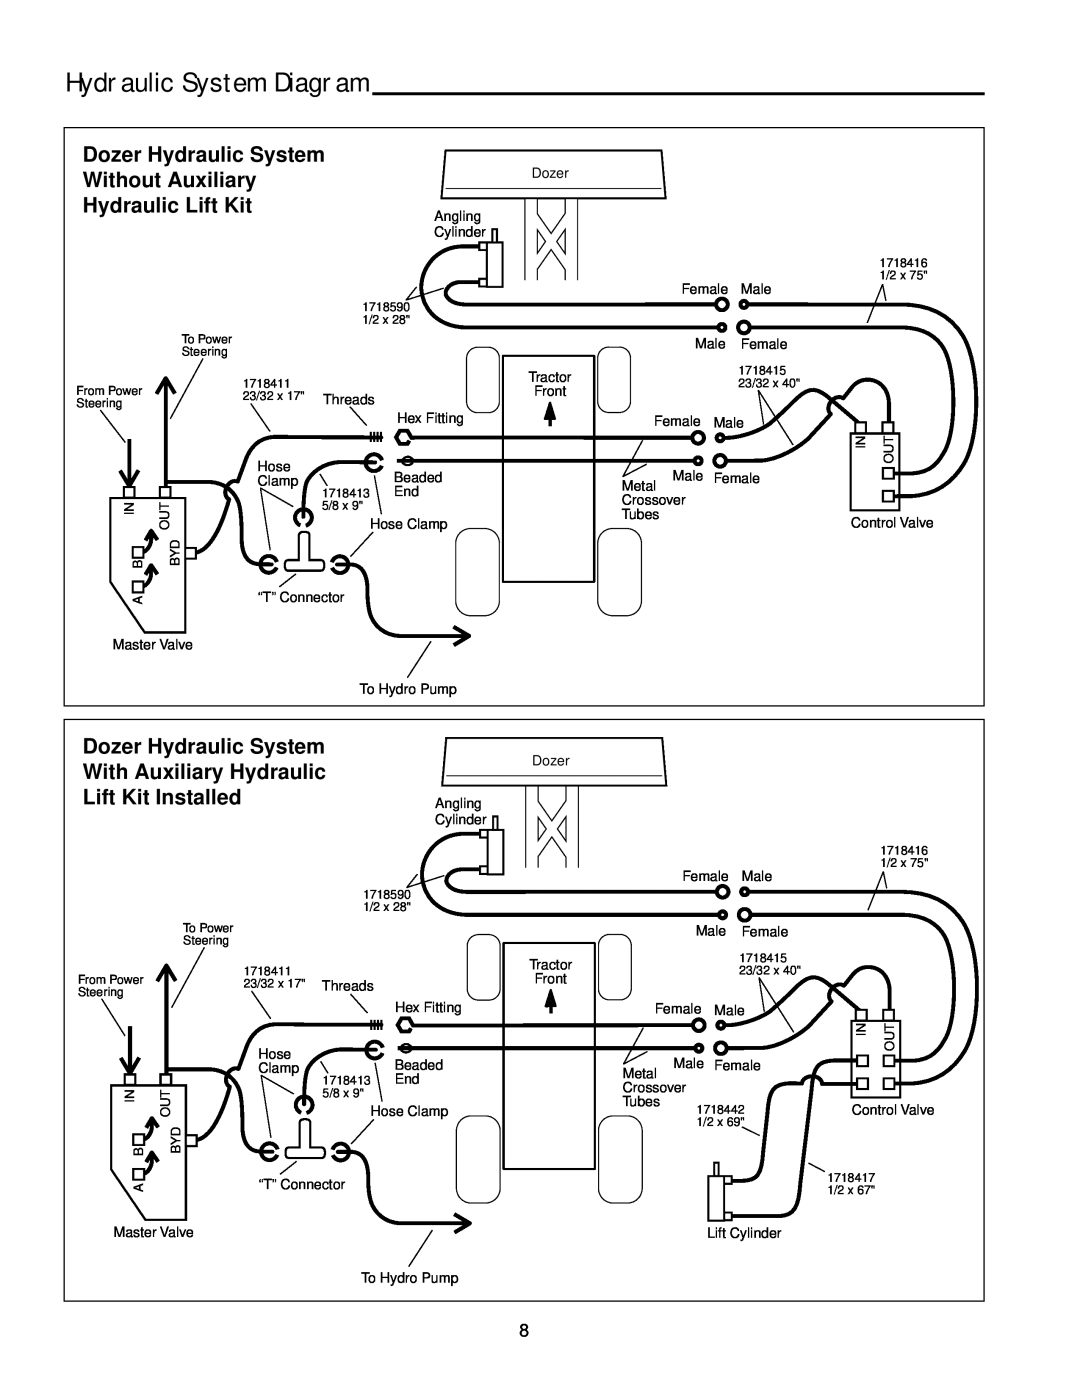 Snapper 2137 manual Hydraulic System Diagram, Dozer Hydraulic System Without Auxiliary Hydraulic Lift Kit 